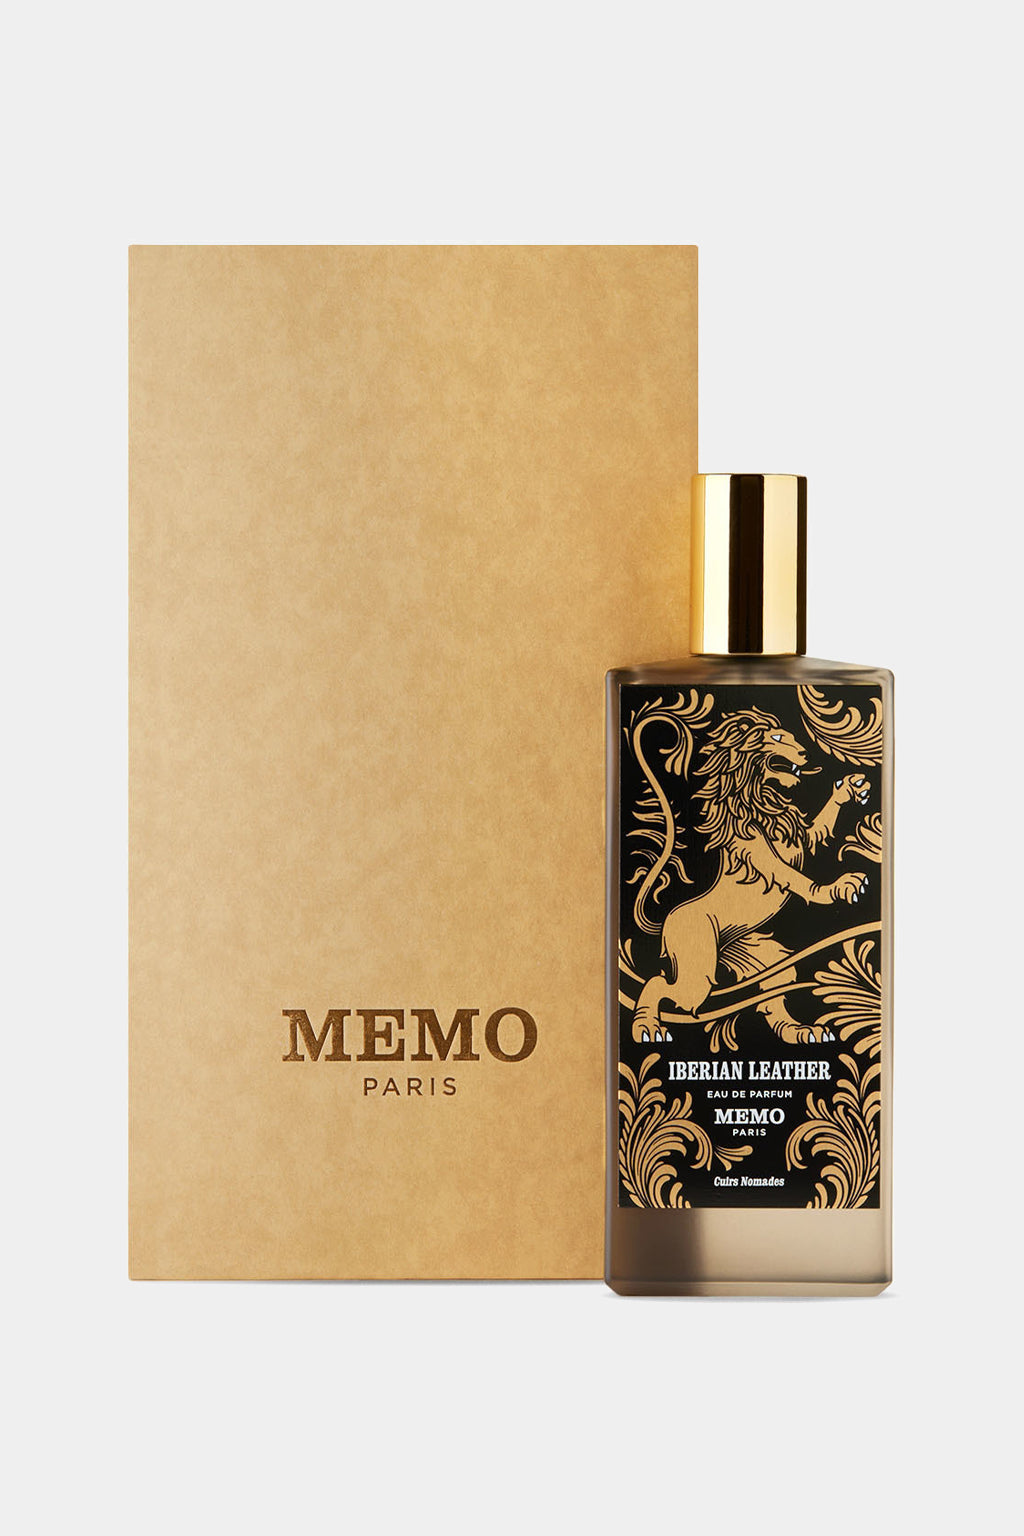 Memo Paris - Iberian Leather Eau de Parfum